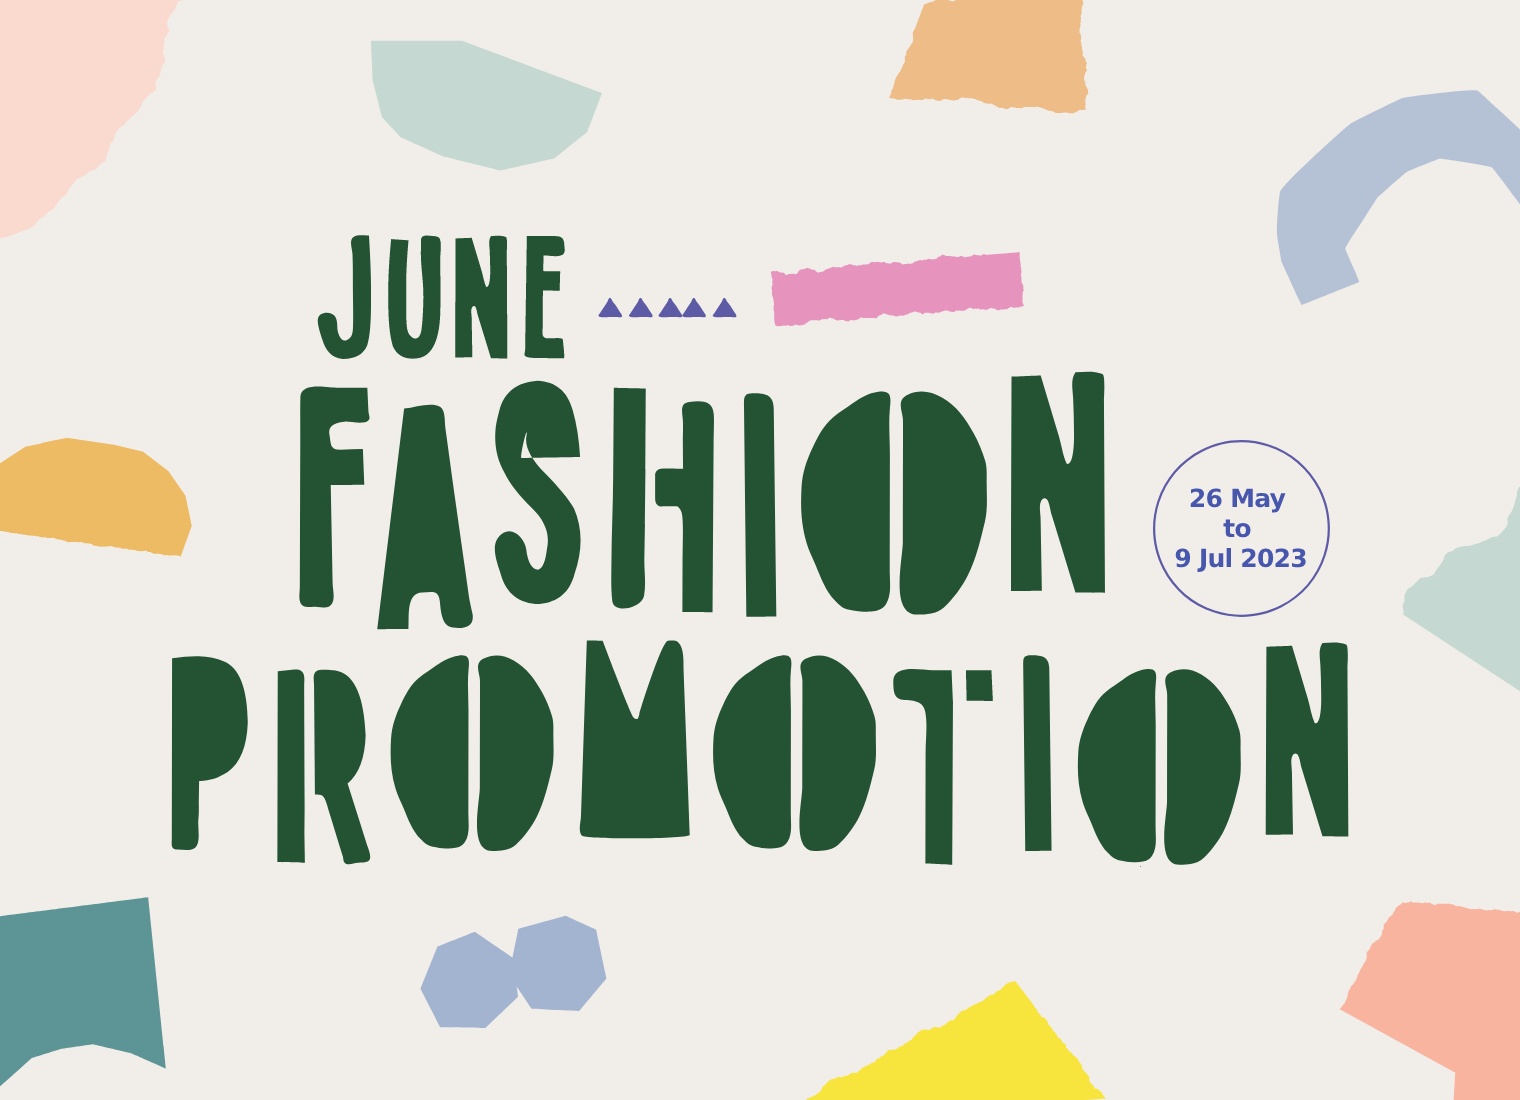 June Fashion Promotion 2023